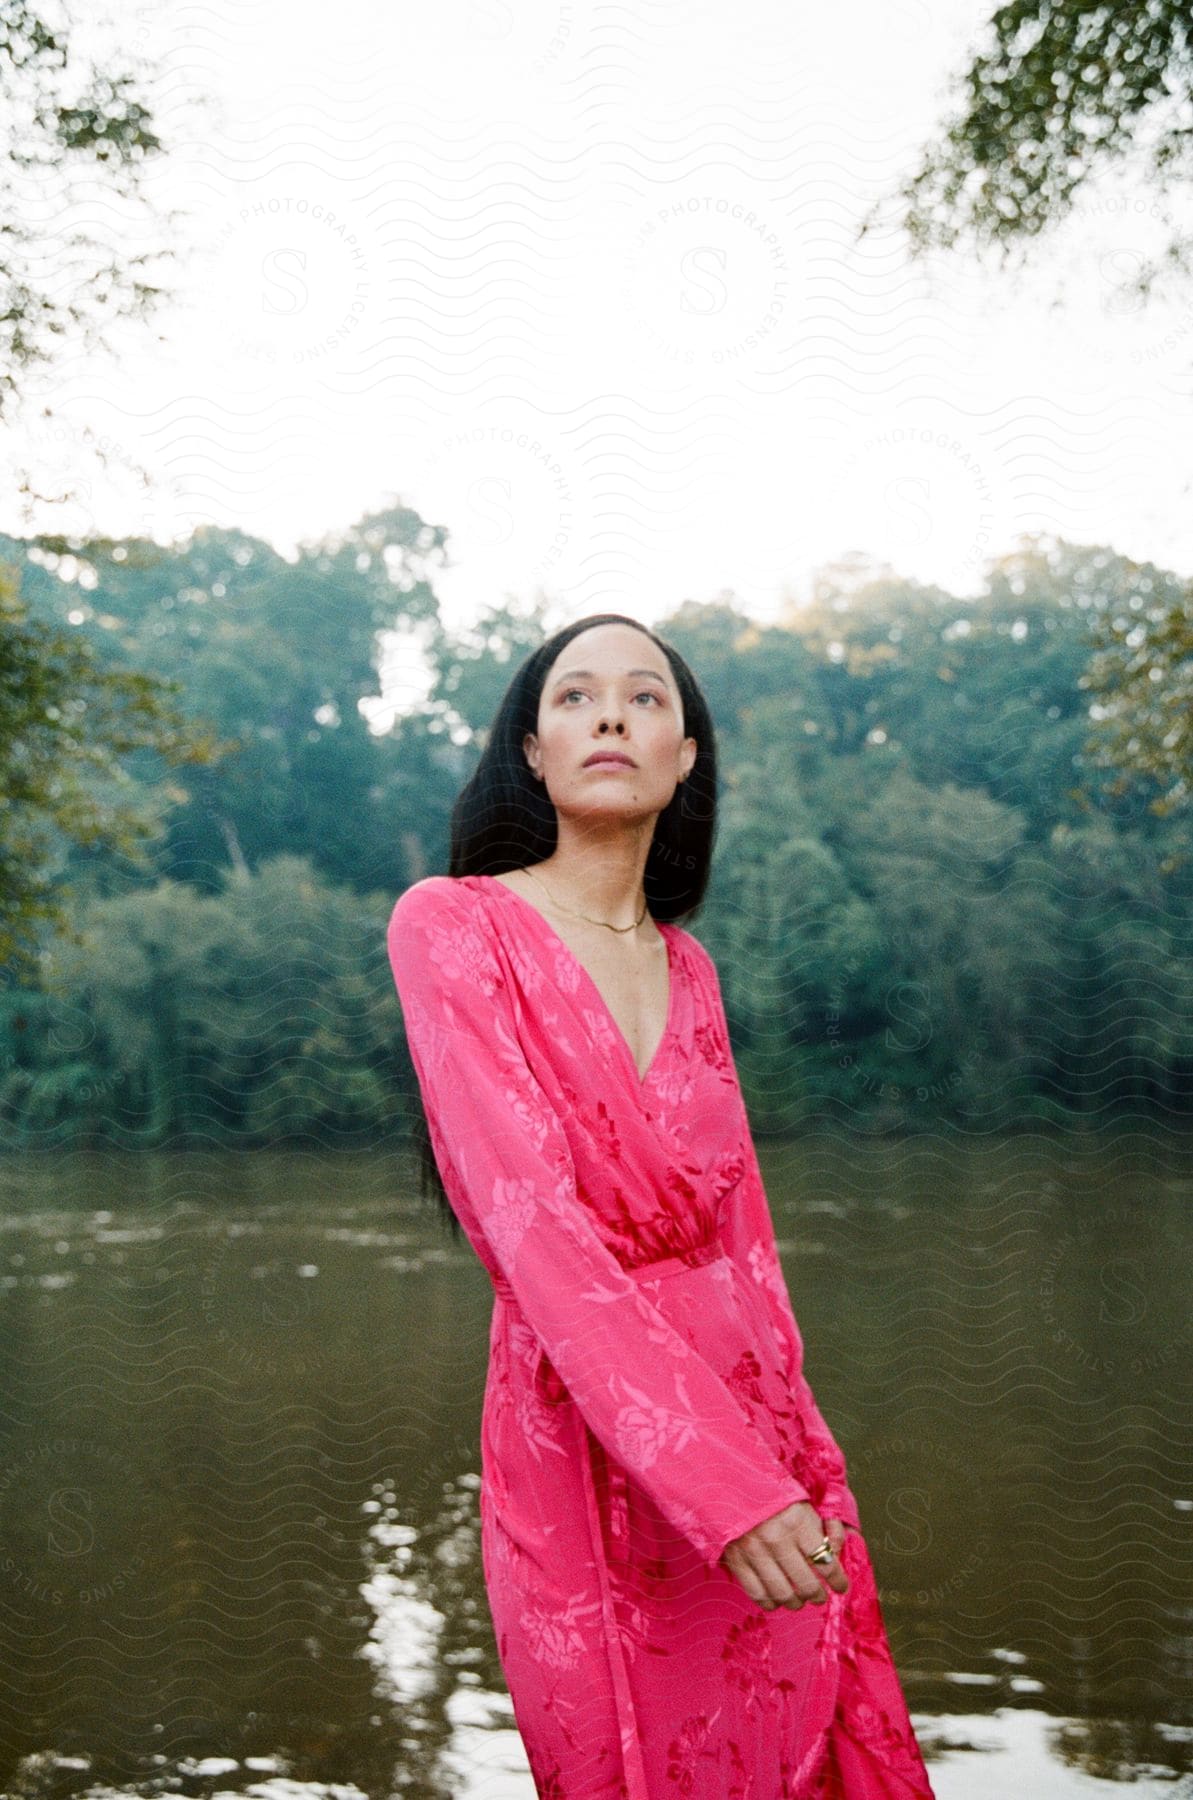 A woman modeling a robe outdoors near a lake.